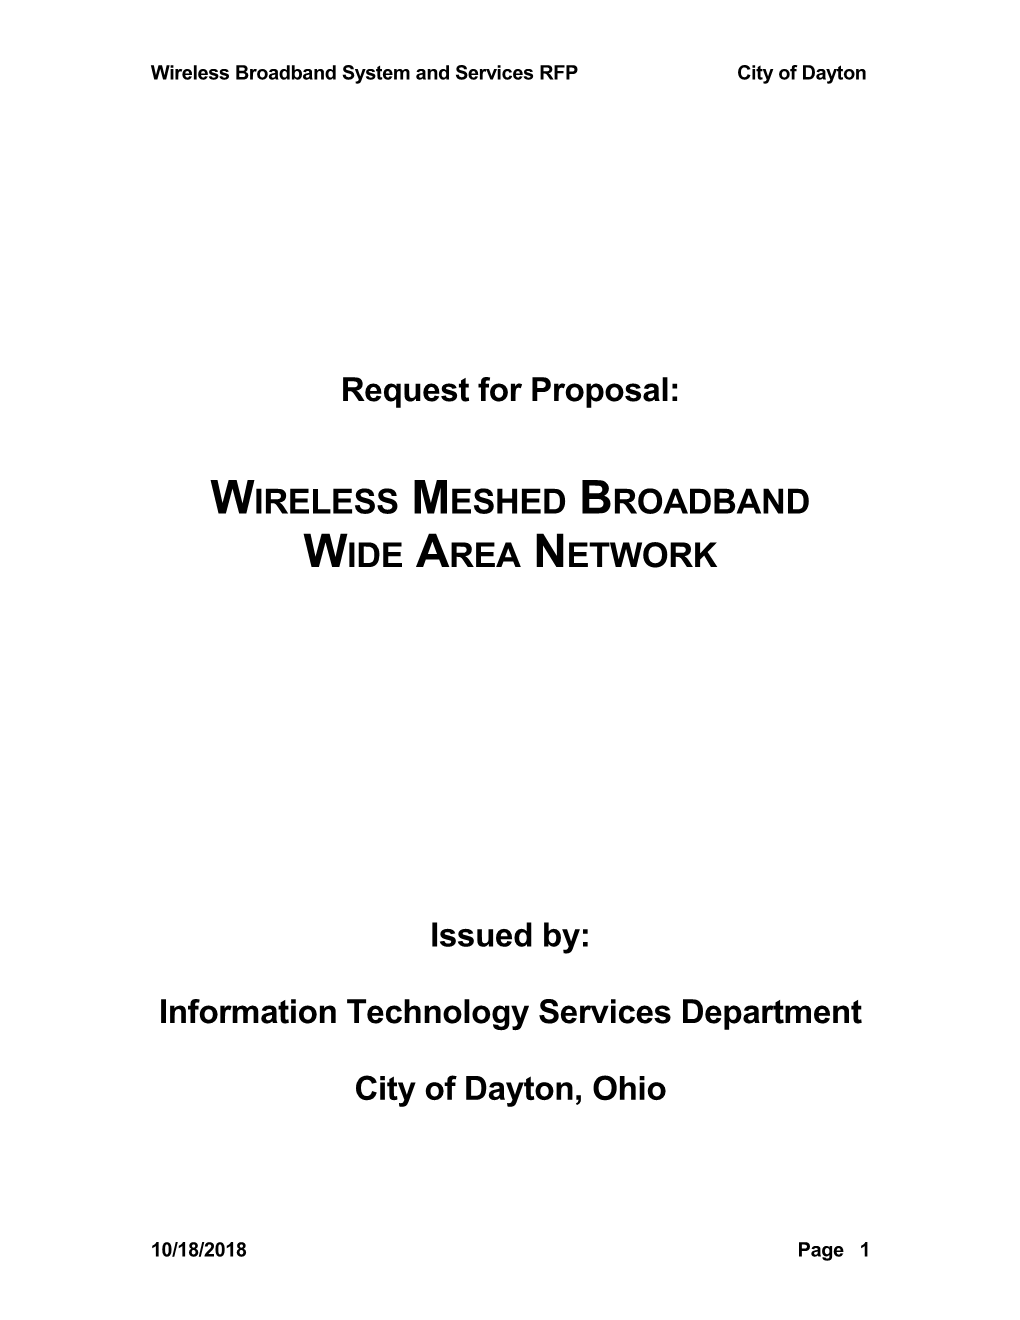 Wireless Meshed Broadband Wide Area Network